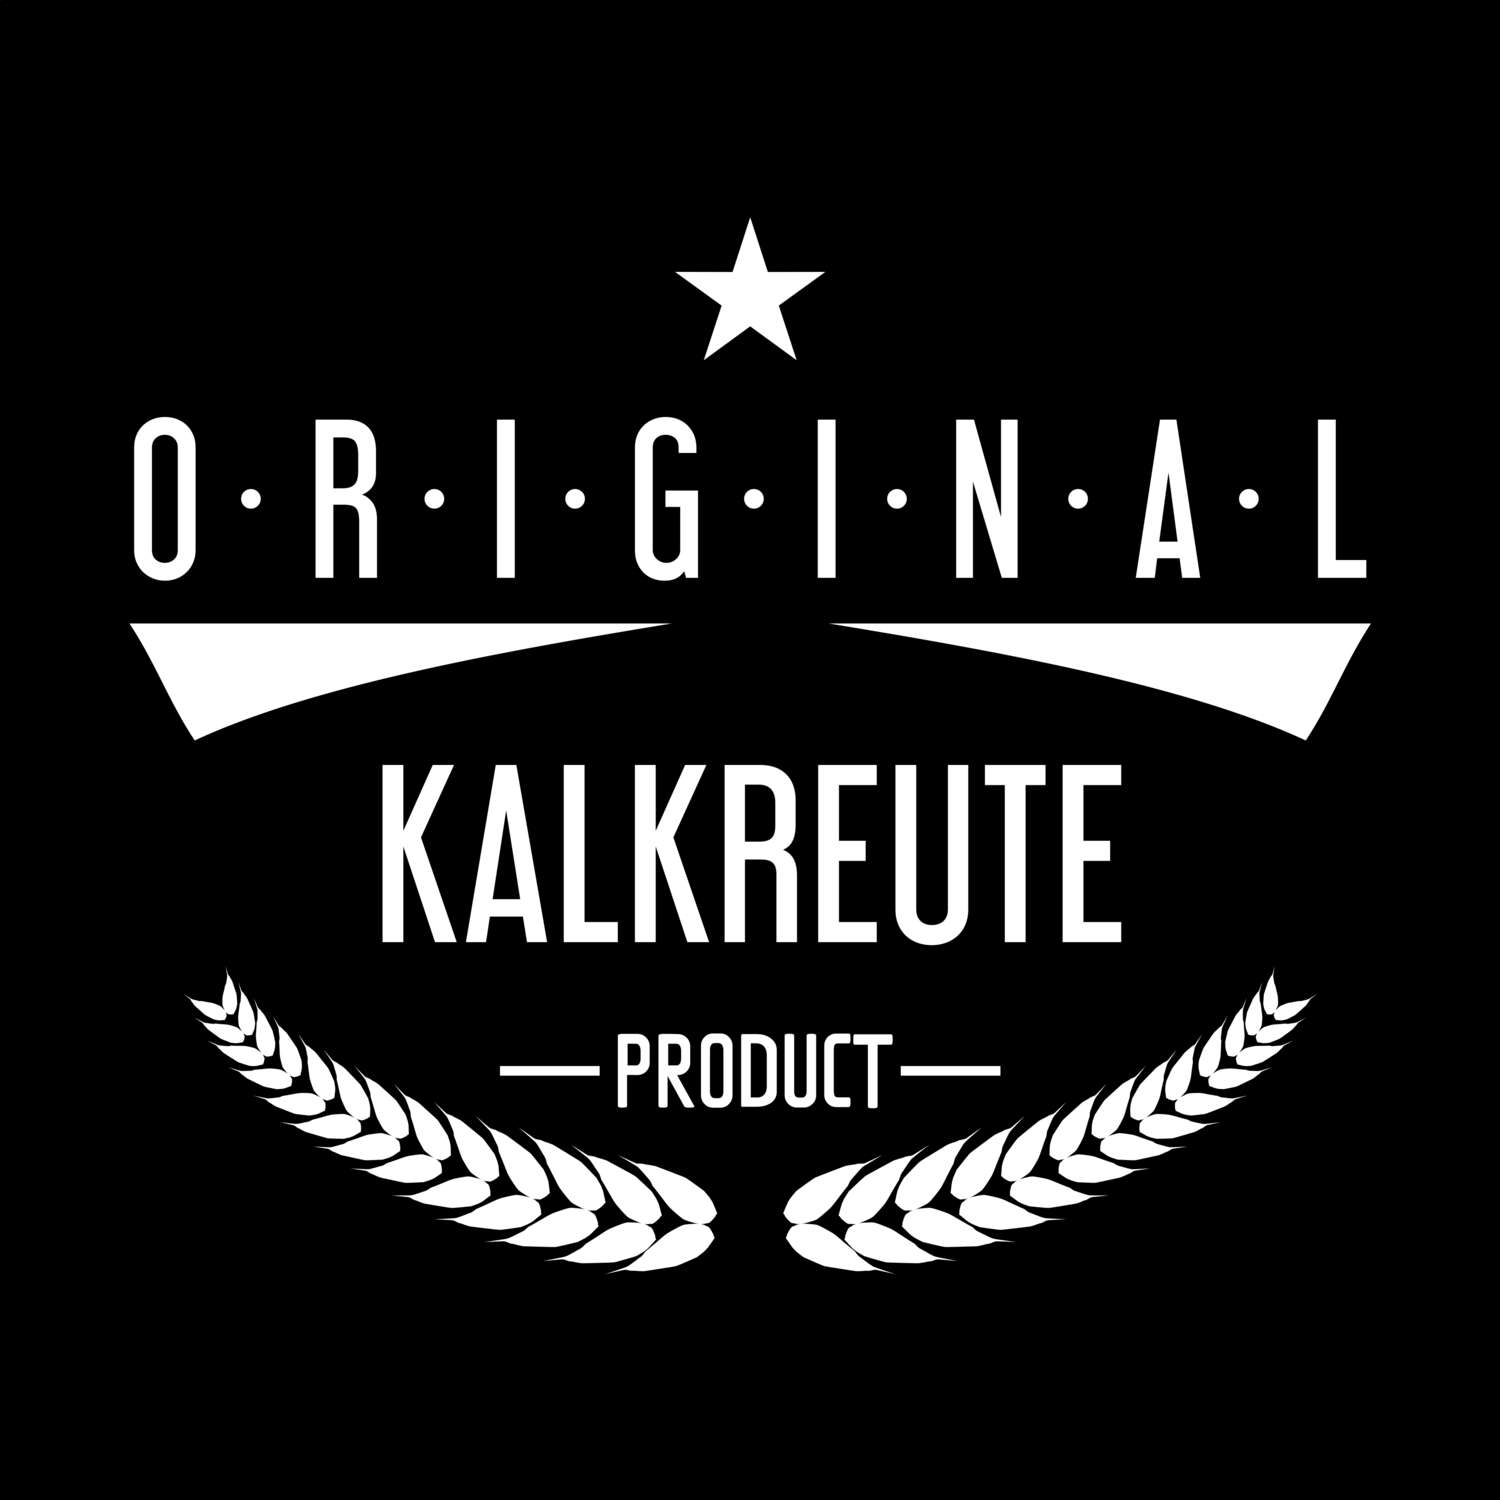 Kalkreute T-Shirt »Original Product«